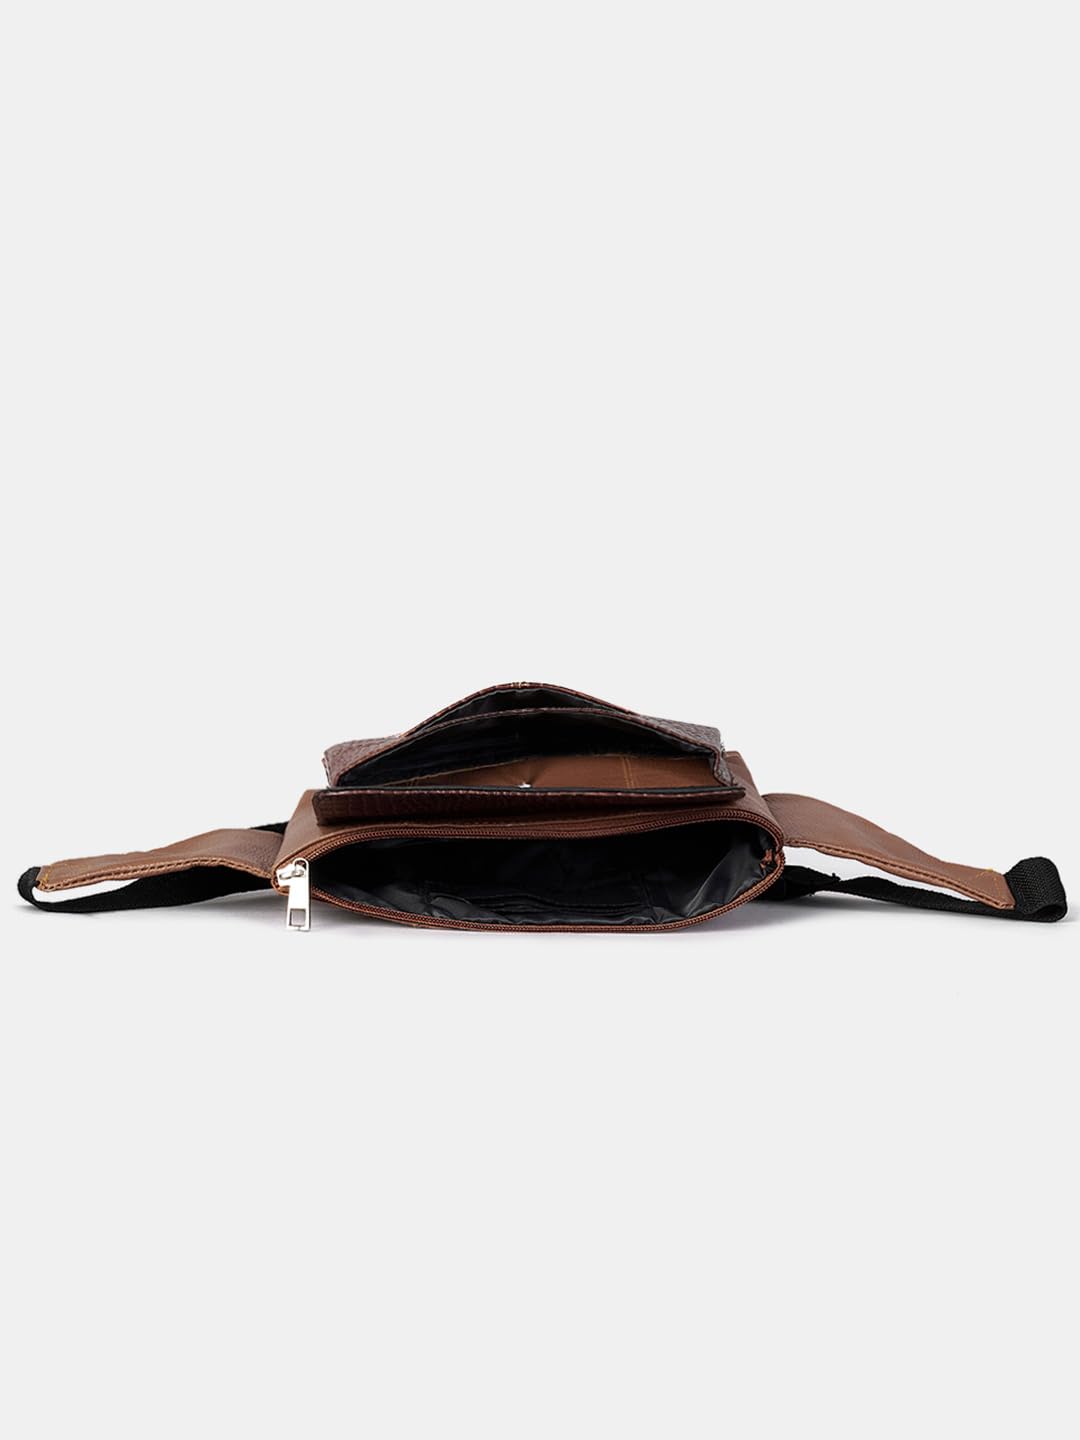 CIMONI® Premium Genuine Leather Waist Bag Classy Design Hiking Zip Pouch with Adjustable Straps Fanny Bag